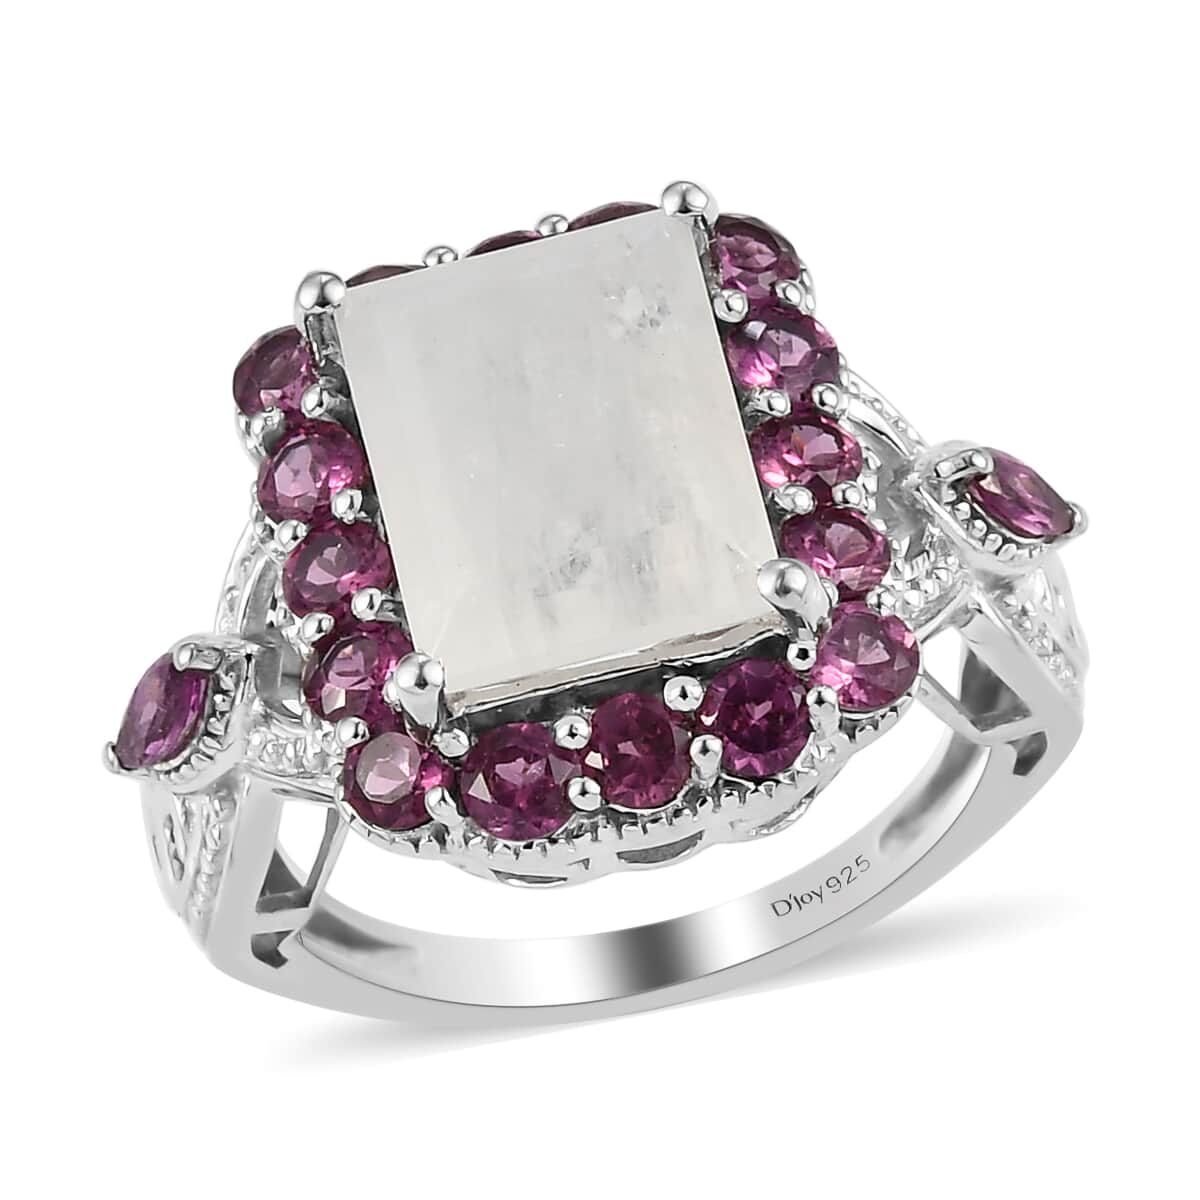 Kuisa Rainbow Moonstone and Orissa Rhodolite Garnet Ring in Platinum Over Sterling Silver (Size 7.0) 4.85 ctw image number 0